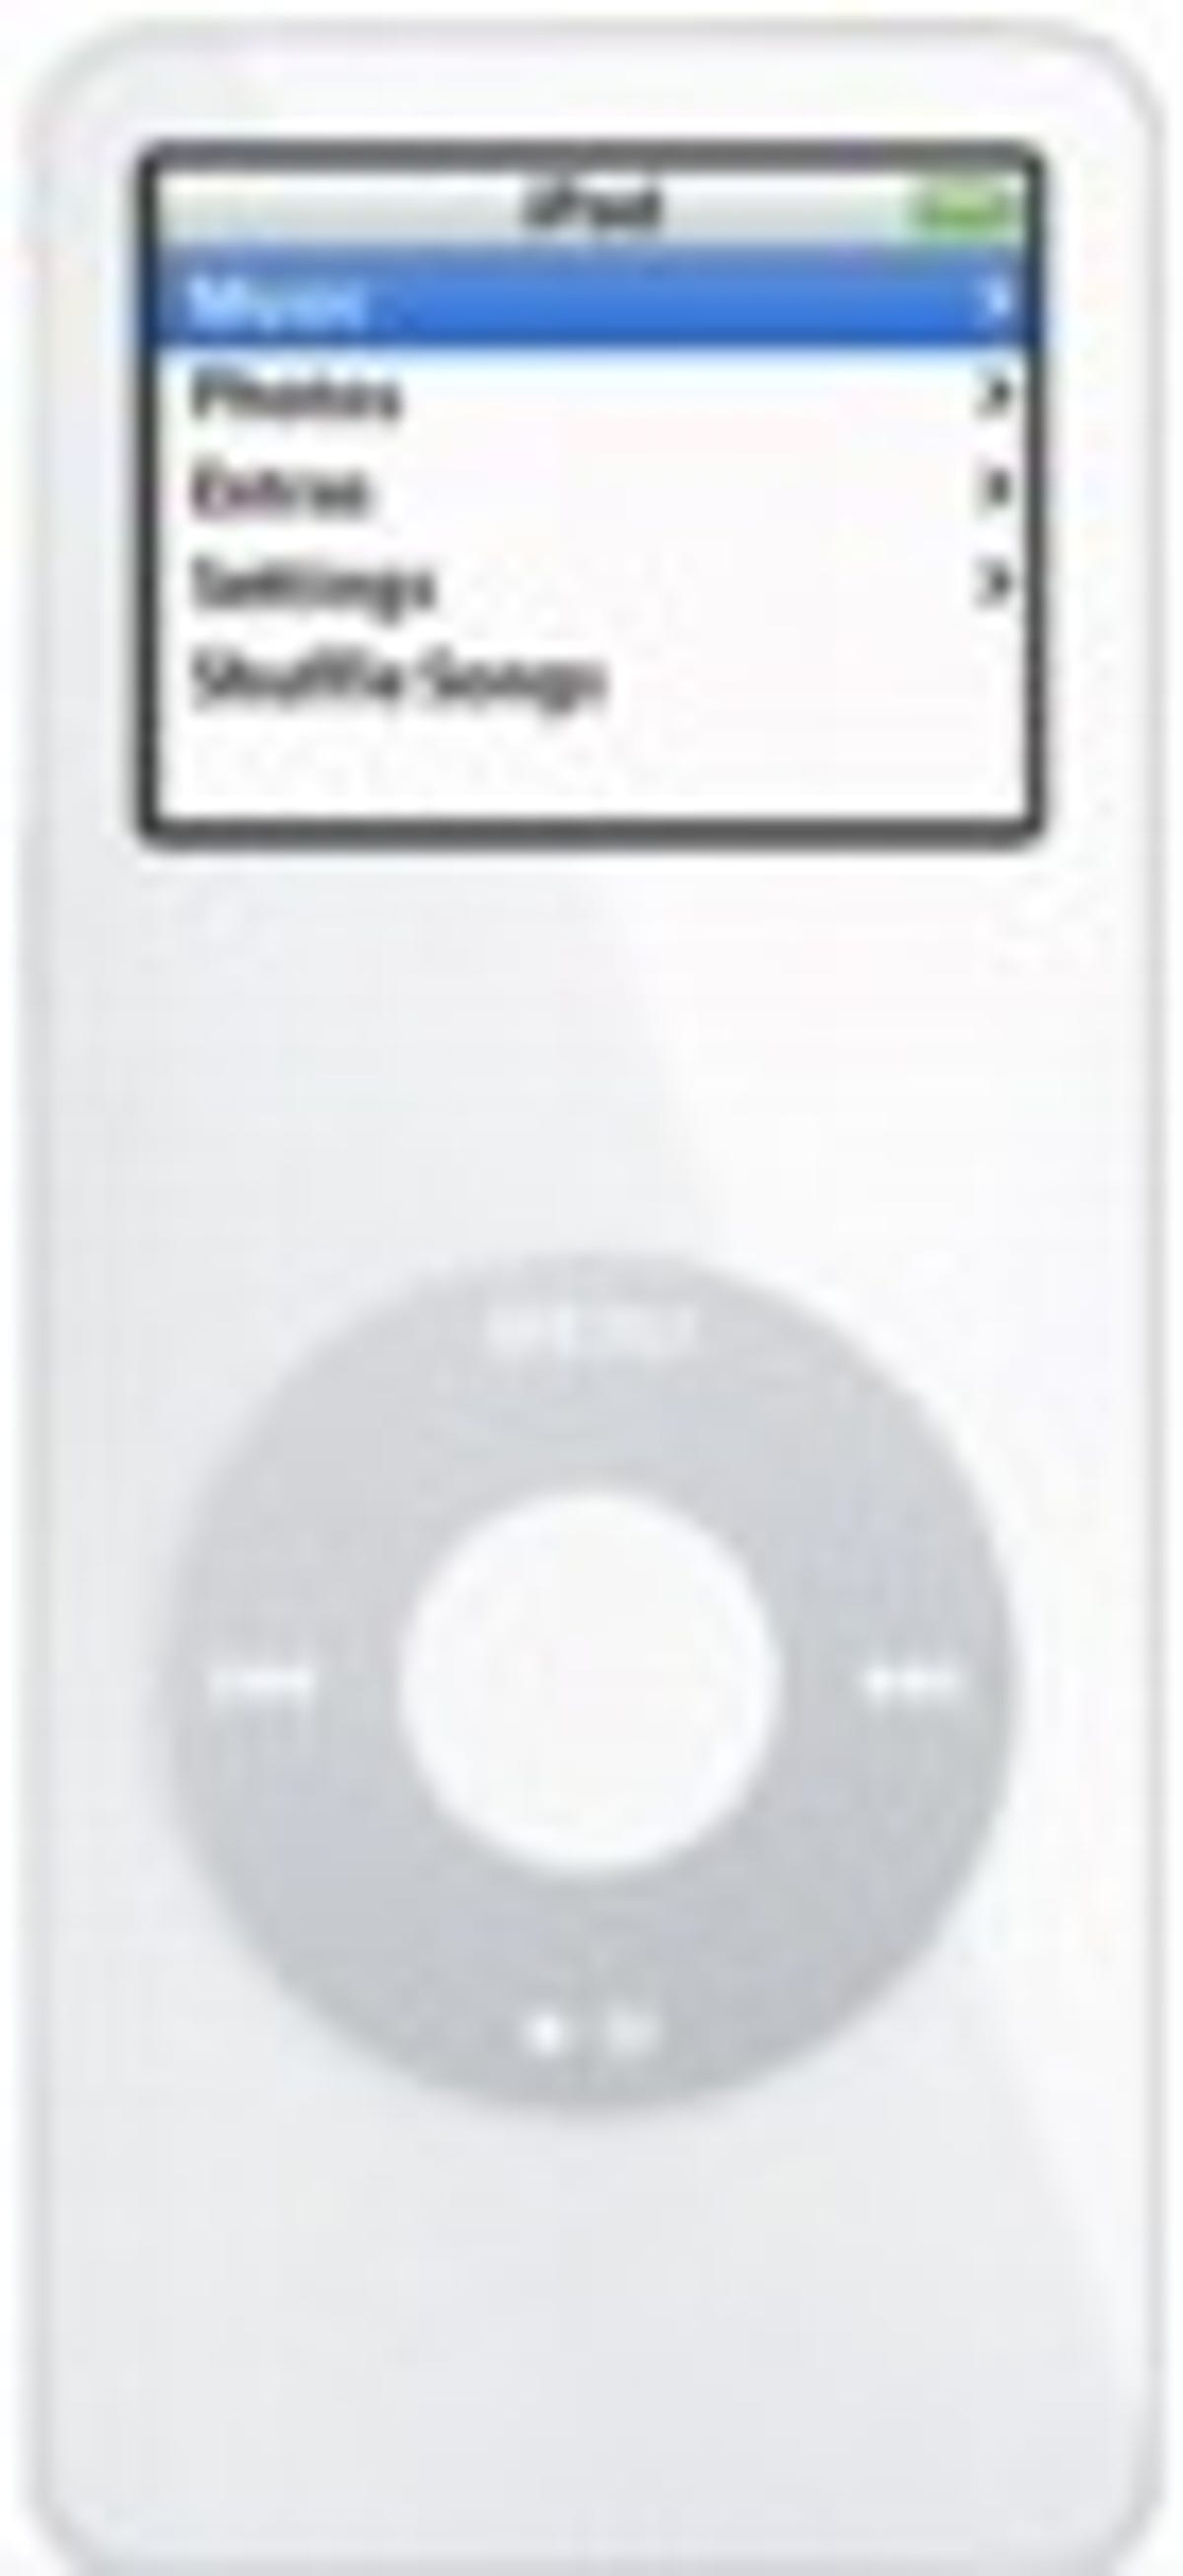 The first-generation iPod Nano.